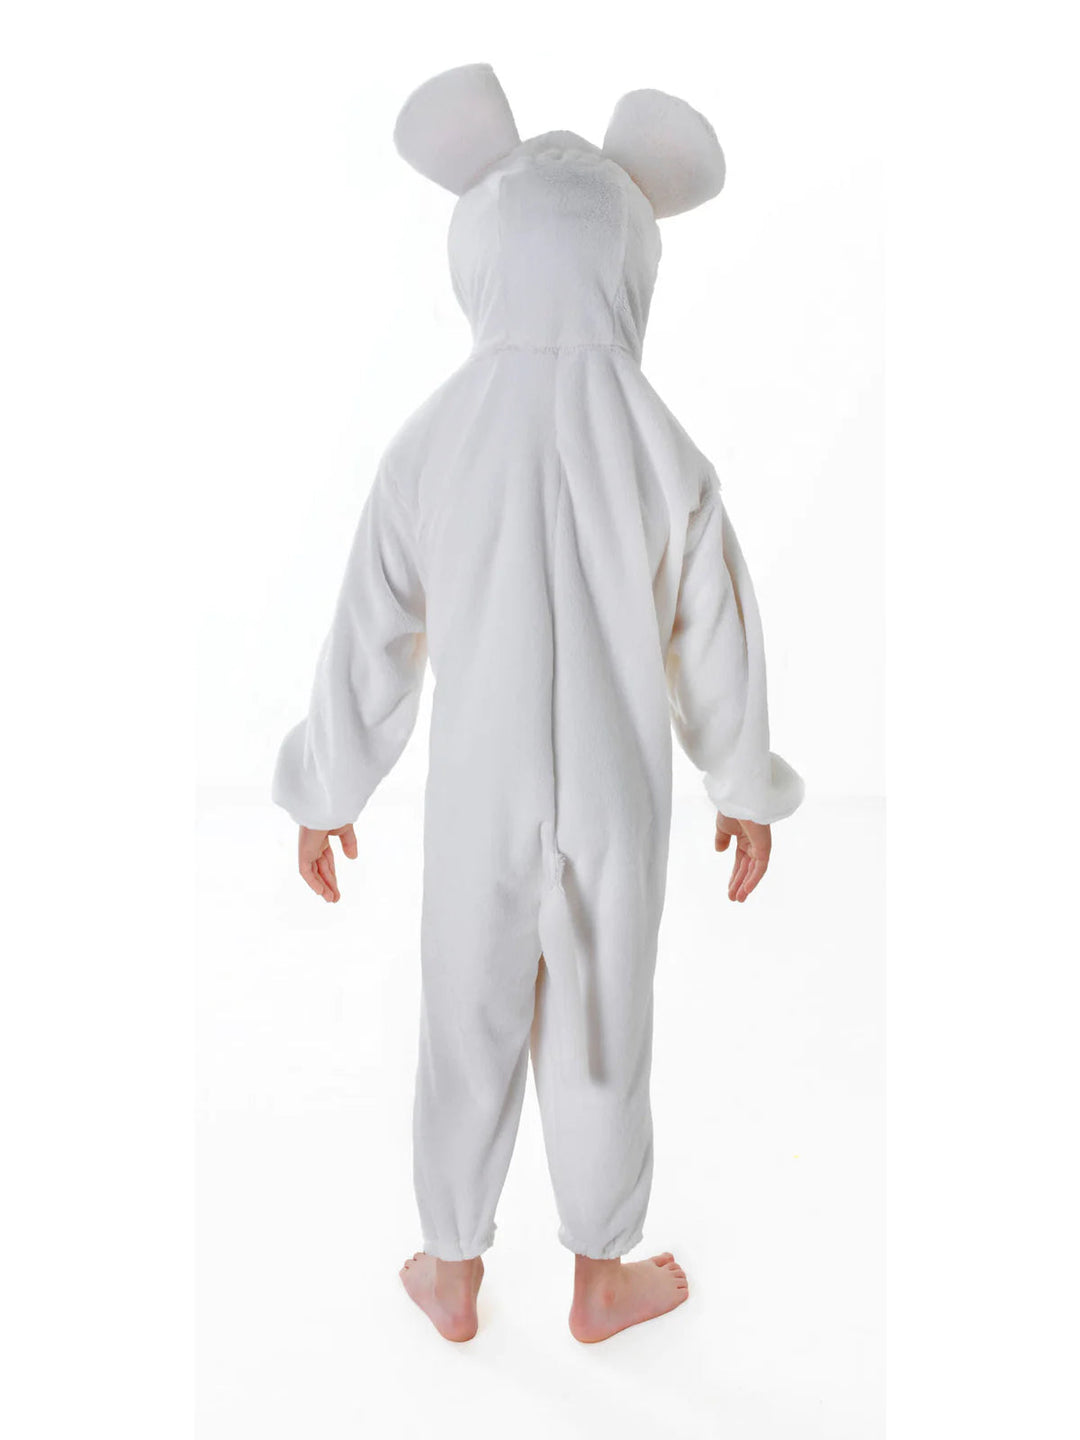 Mouse Costume Plush White Jumpsuit for Kids_3